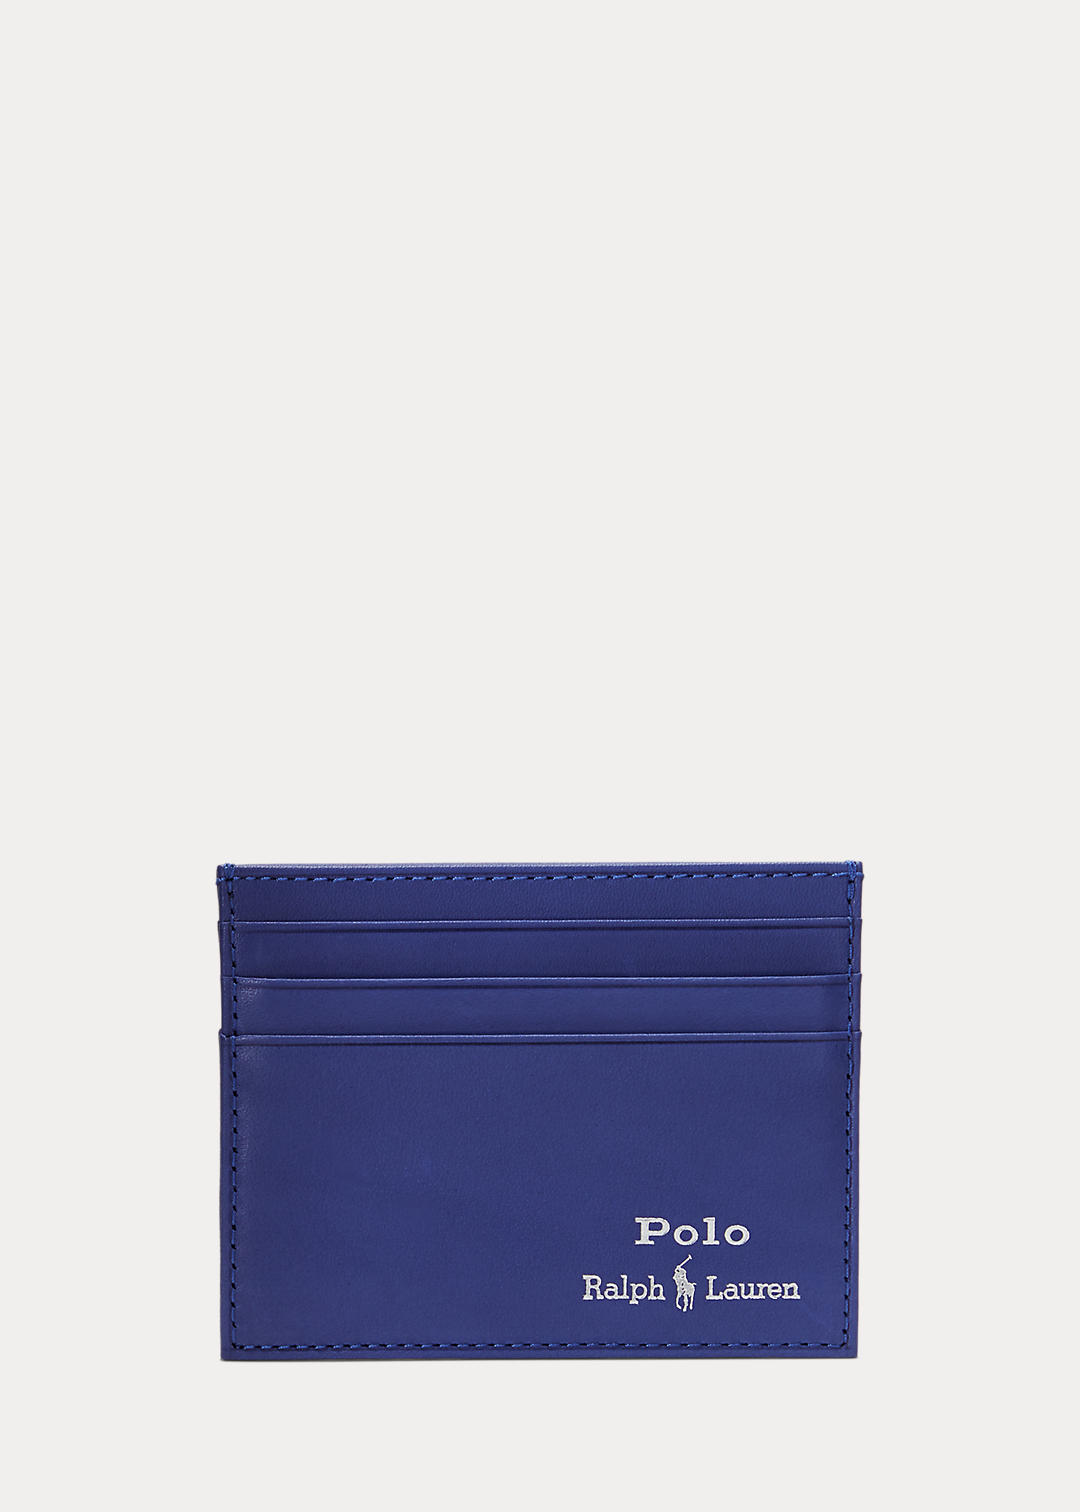 Polo Ralph Lauren Leather Card Case 1